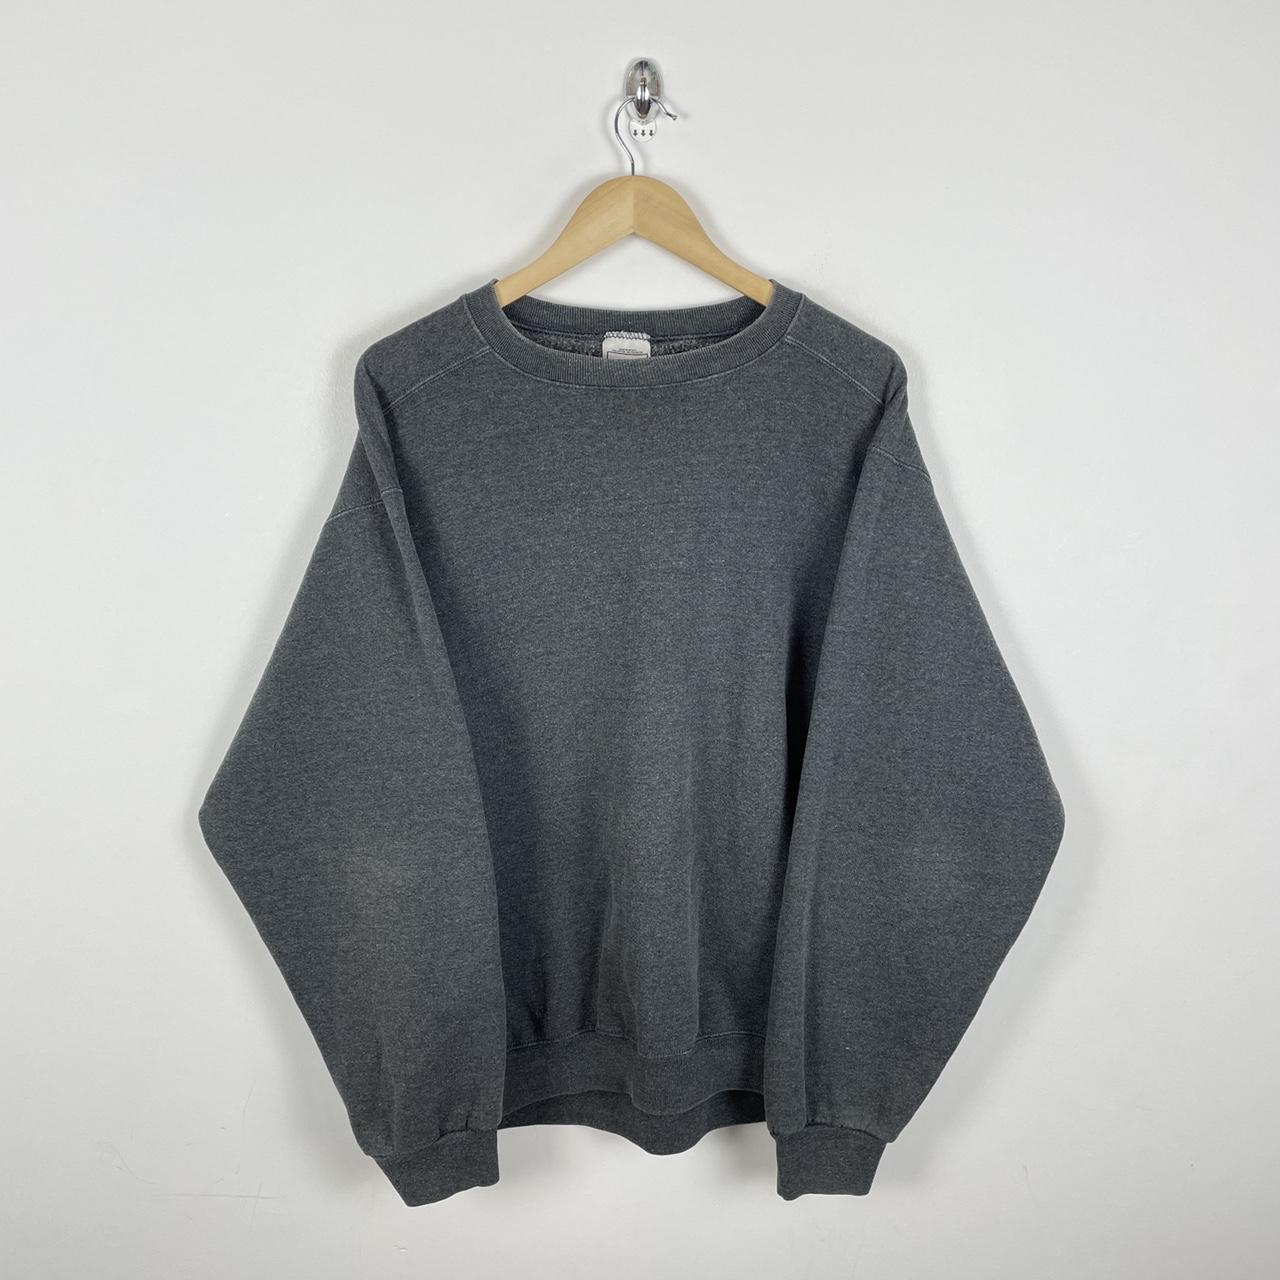 Vintage Sweatshirt 90s Blank Wilson Grey Colour Way... - Depop